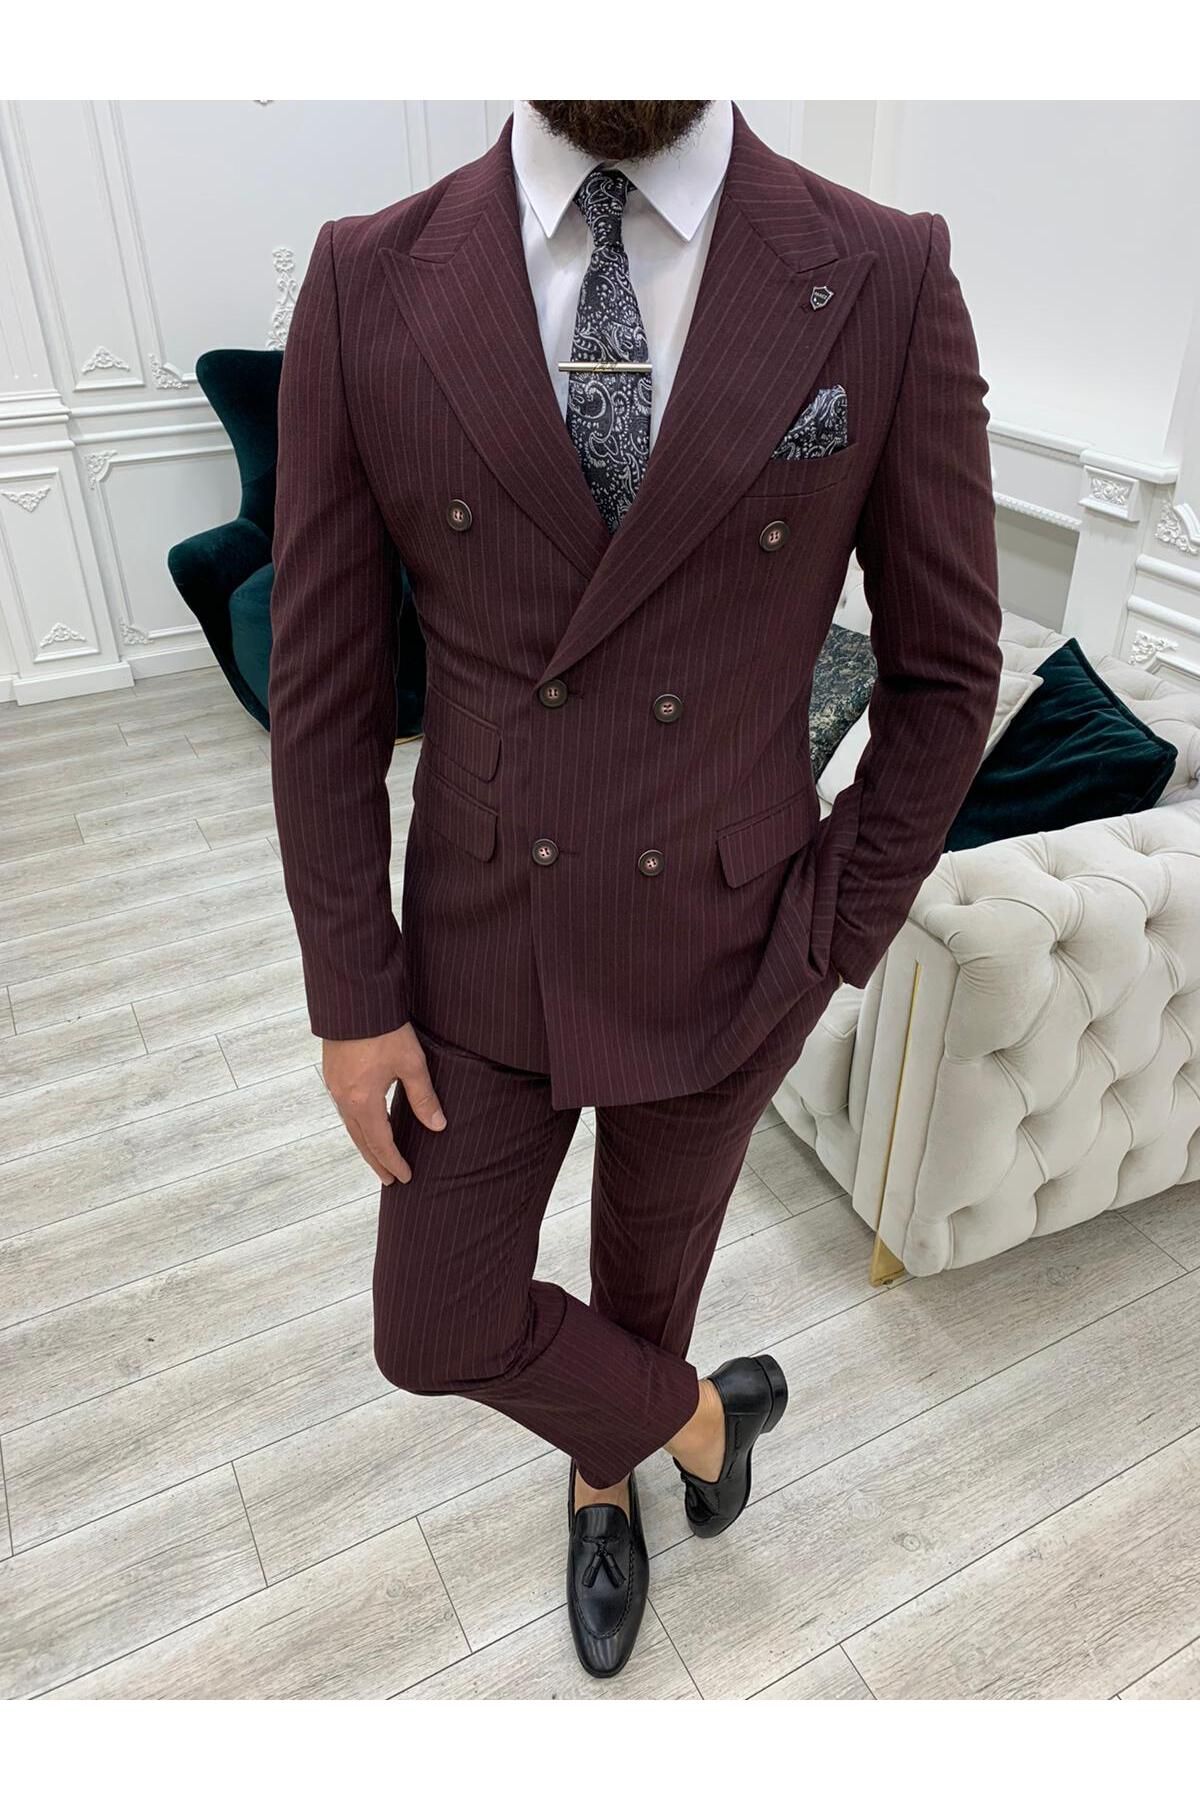 LONATOLİA Erkek Çizgili Kruvaze Takım Elbise İtalyan Kesim Slim Fit Ceket Pantolon-Bordo